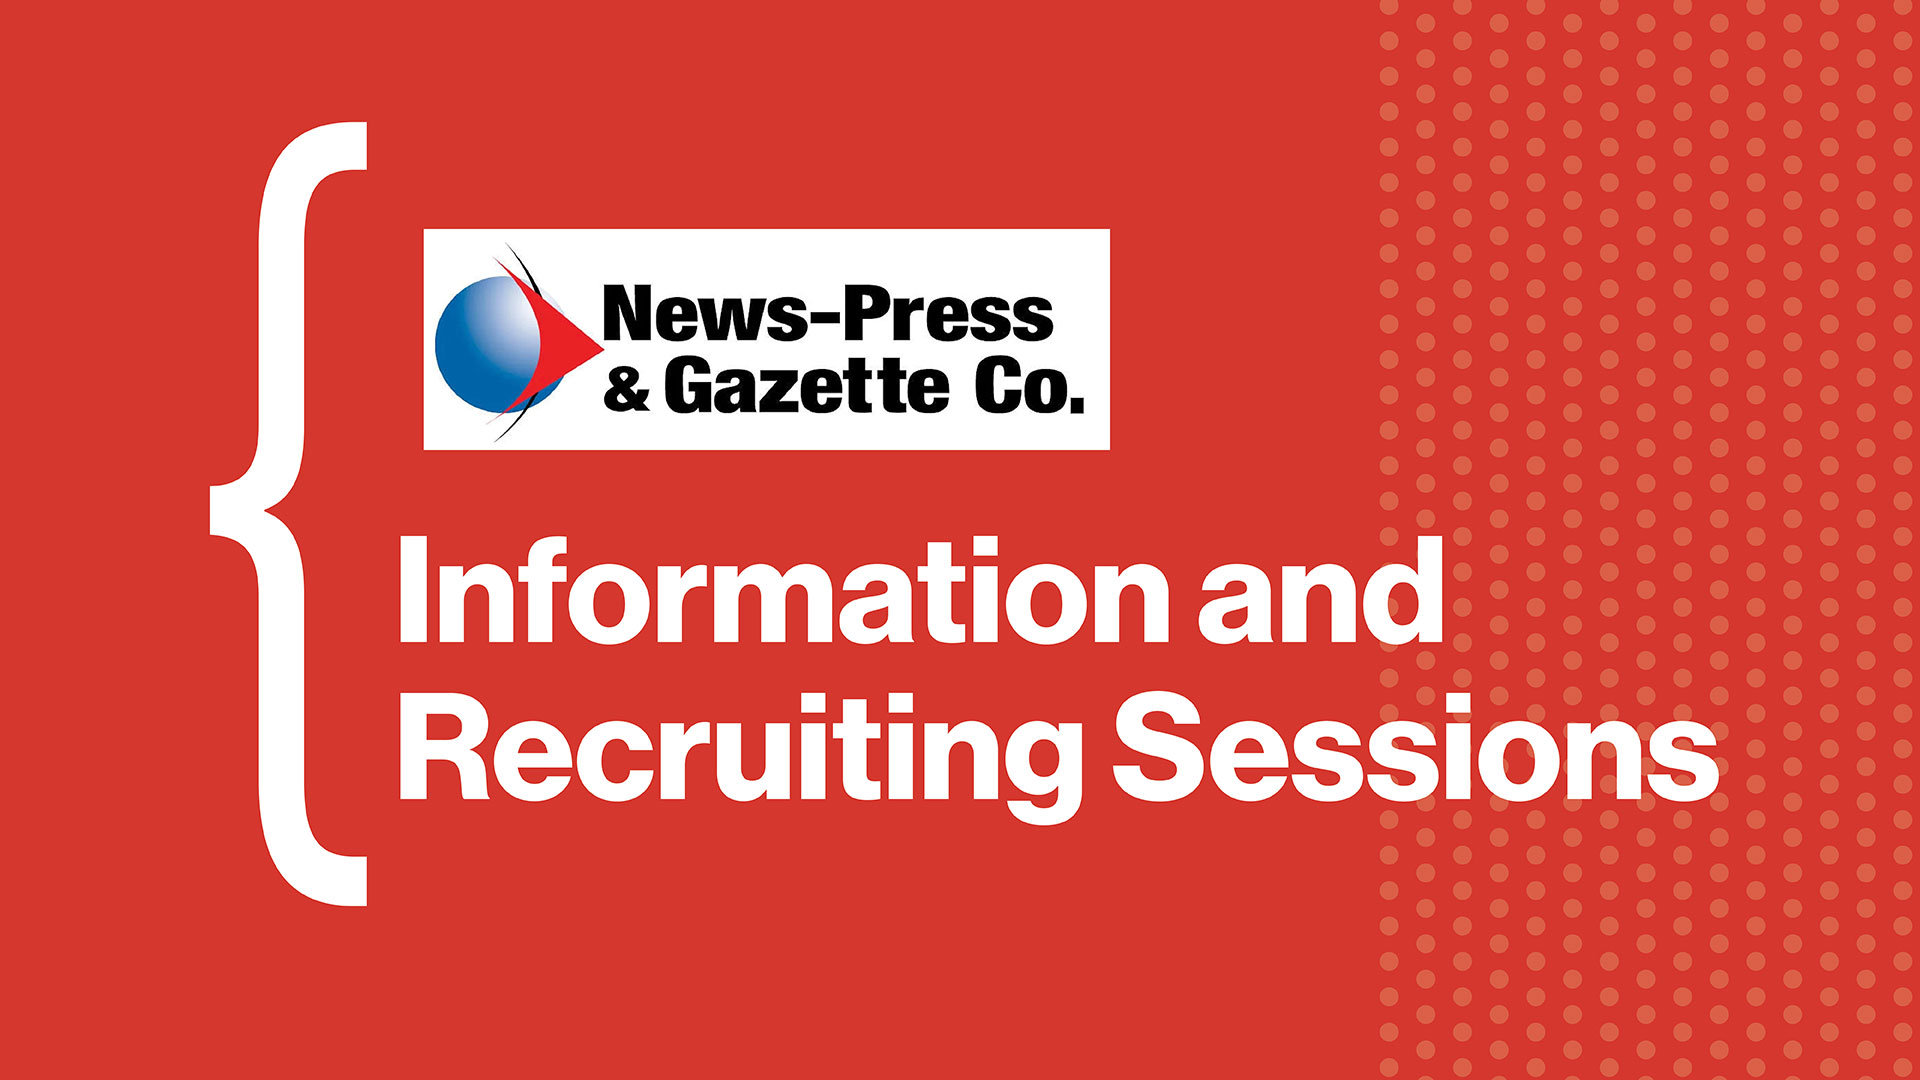 News-Press & Gazette Co. recruiter visit and information session